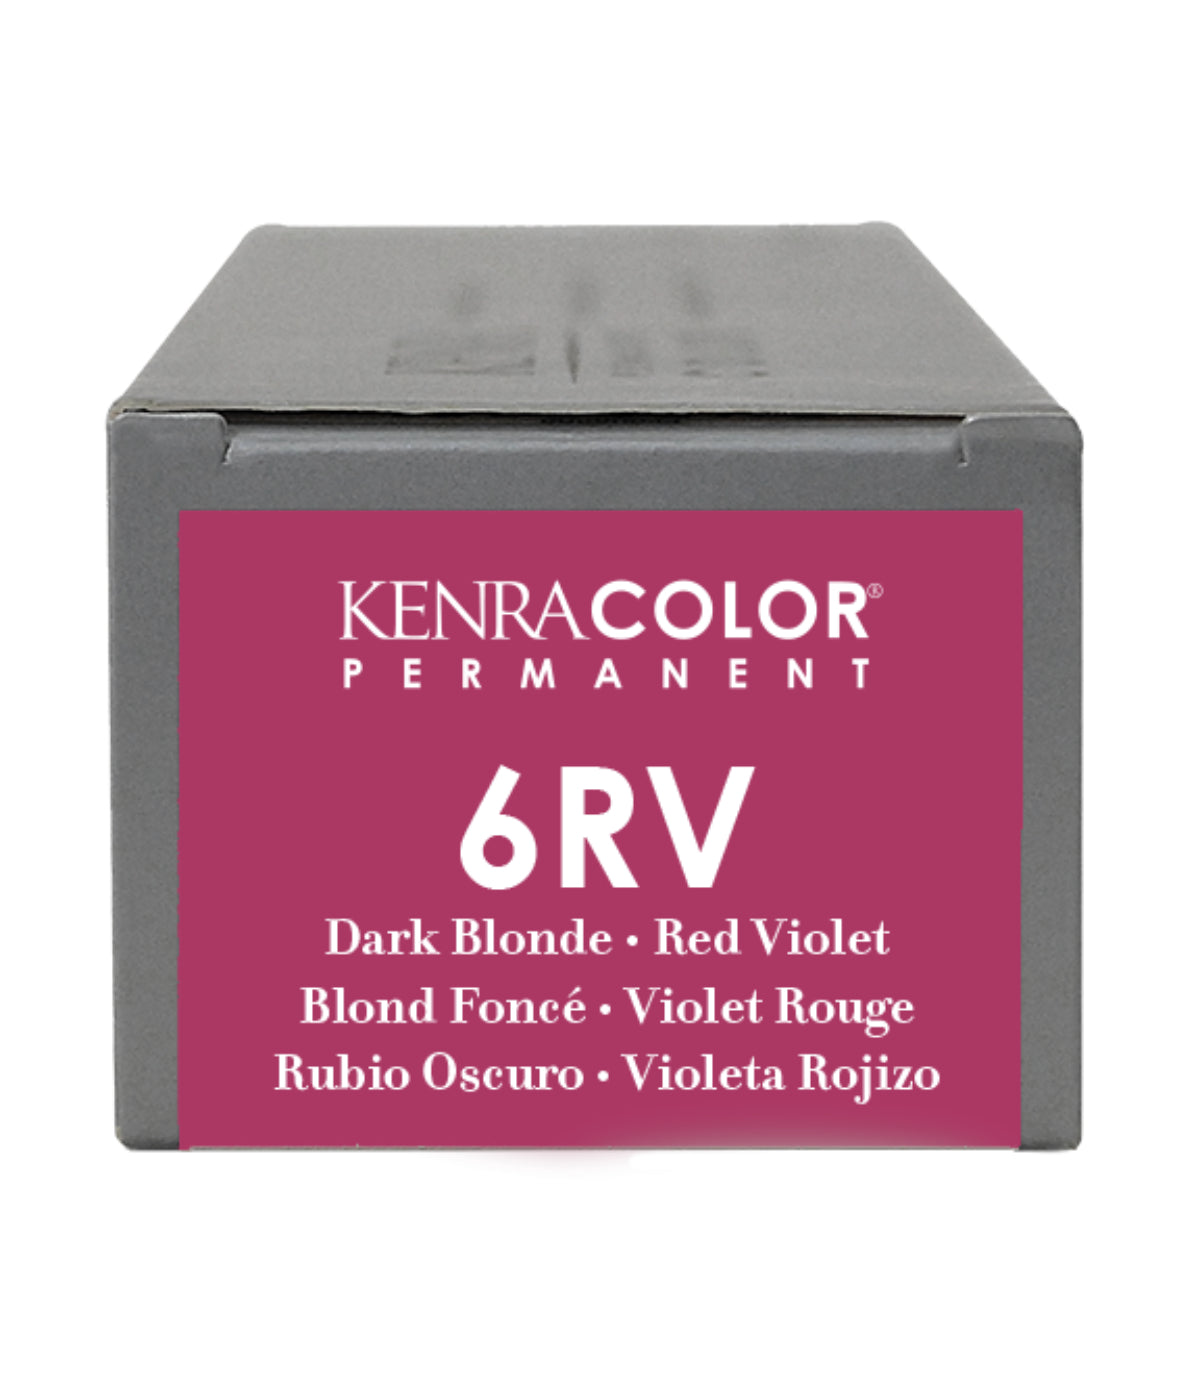 Kenra Color Permanent RED VIOLET - 6RV